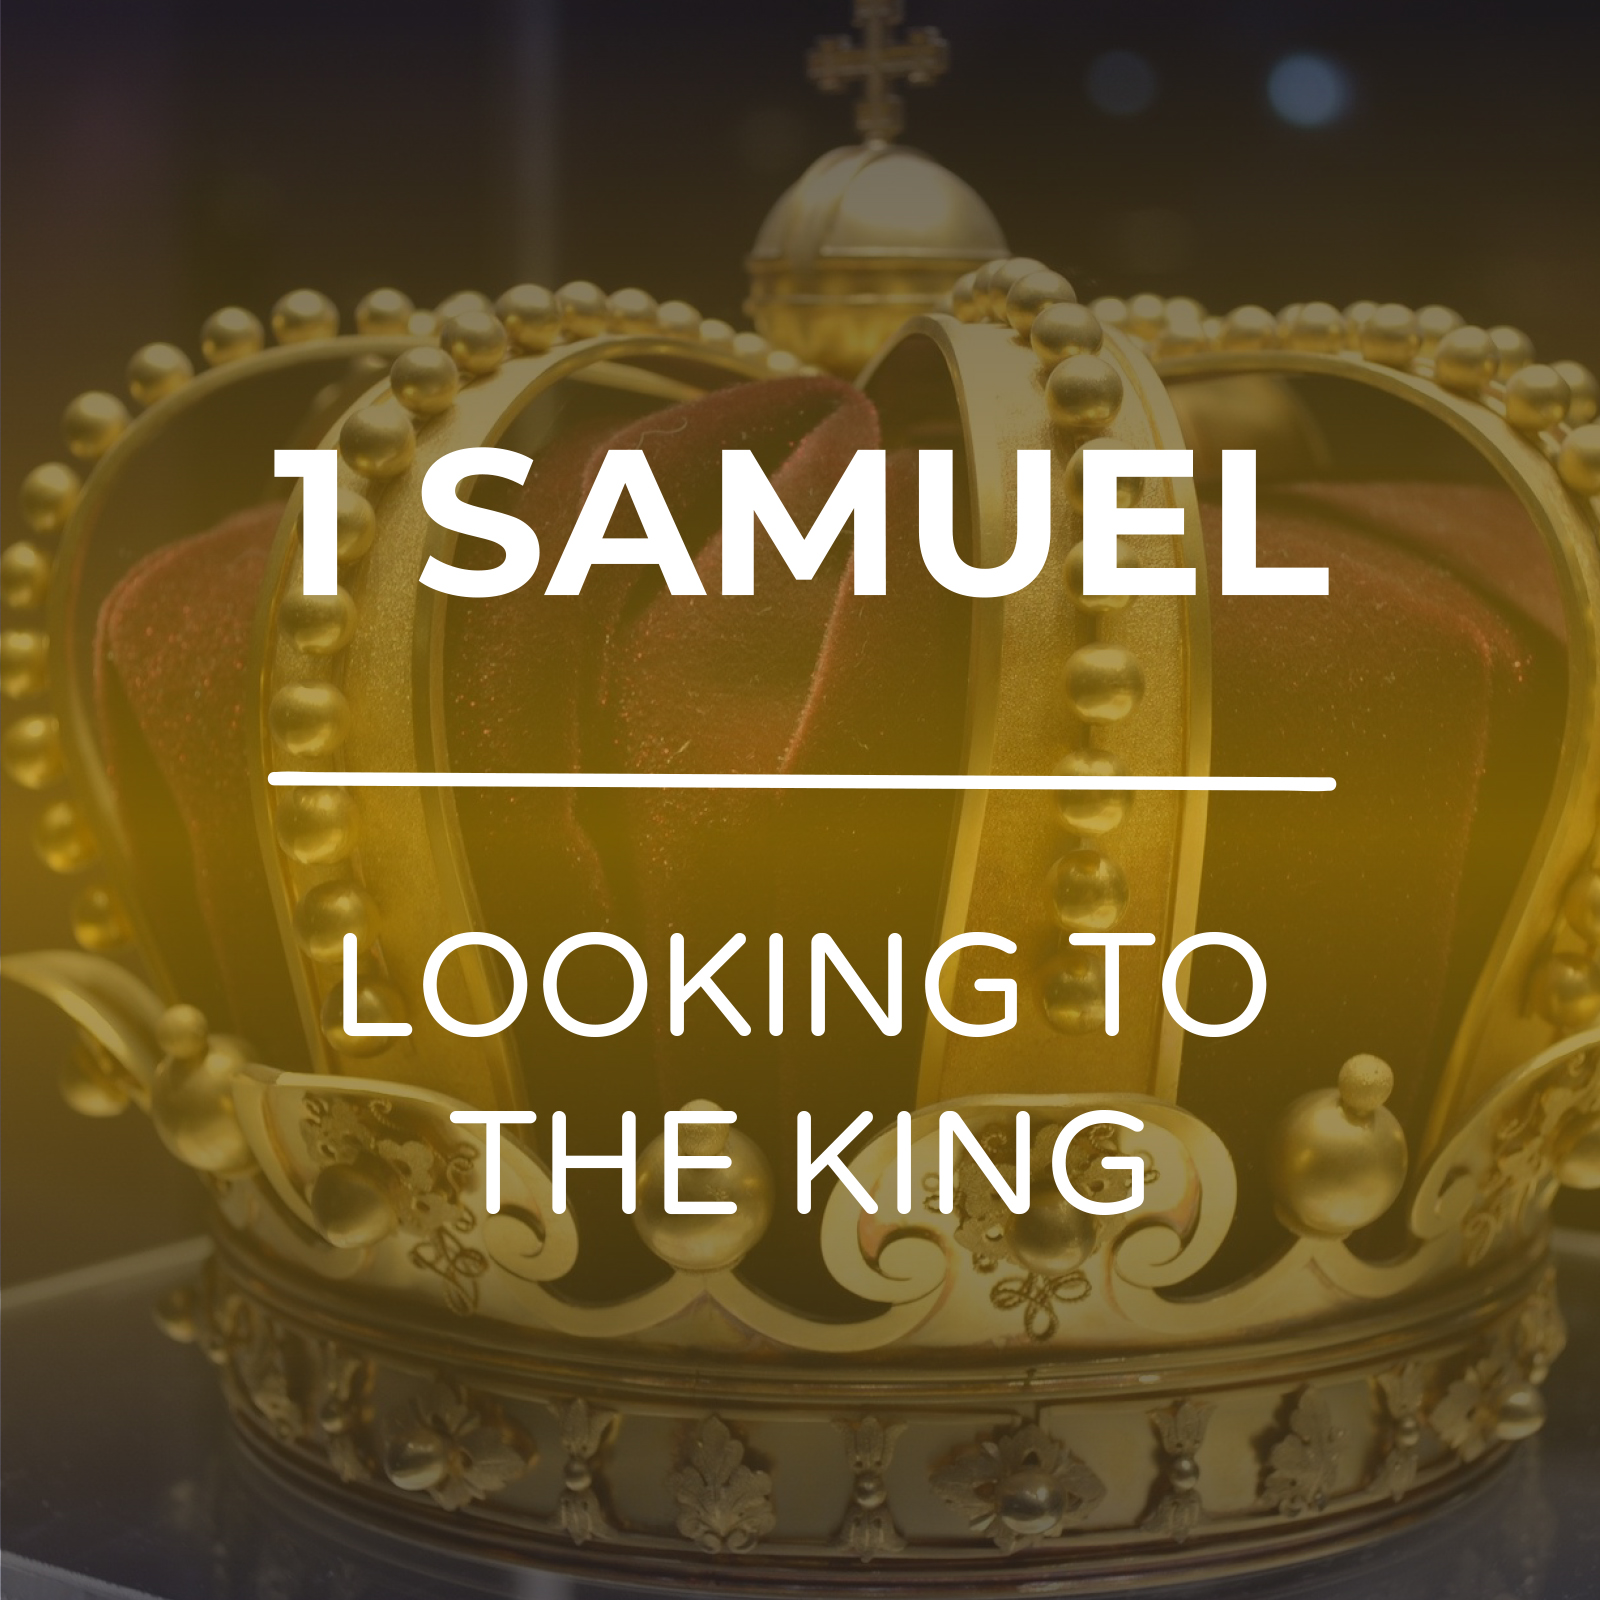 1 Samuel - Looking to the king sermon series - Hope Church Huddersfield